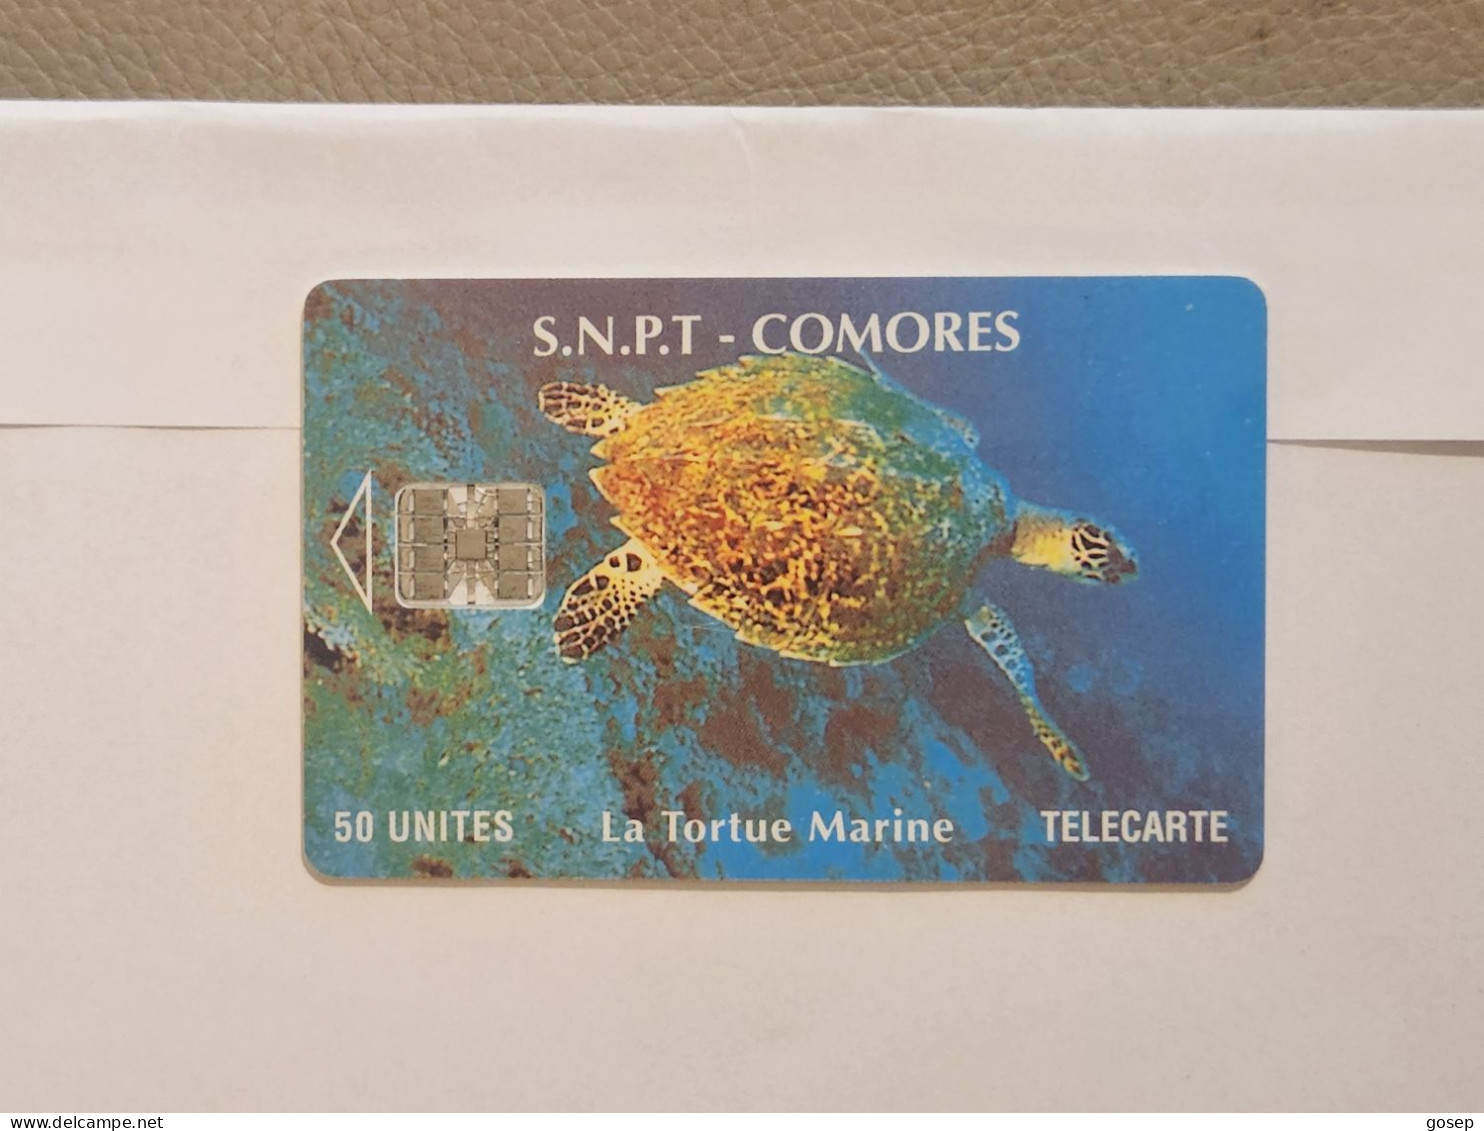 Comores-(KM-OPT-0010C)-La Tortue Marine-(9)-(50units)-(C5B155335)-used Card+1card Prepiad/gift Free - Comoros